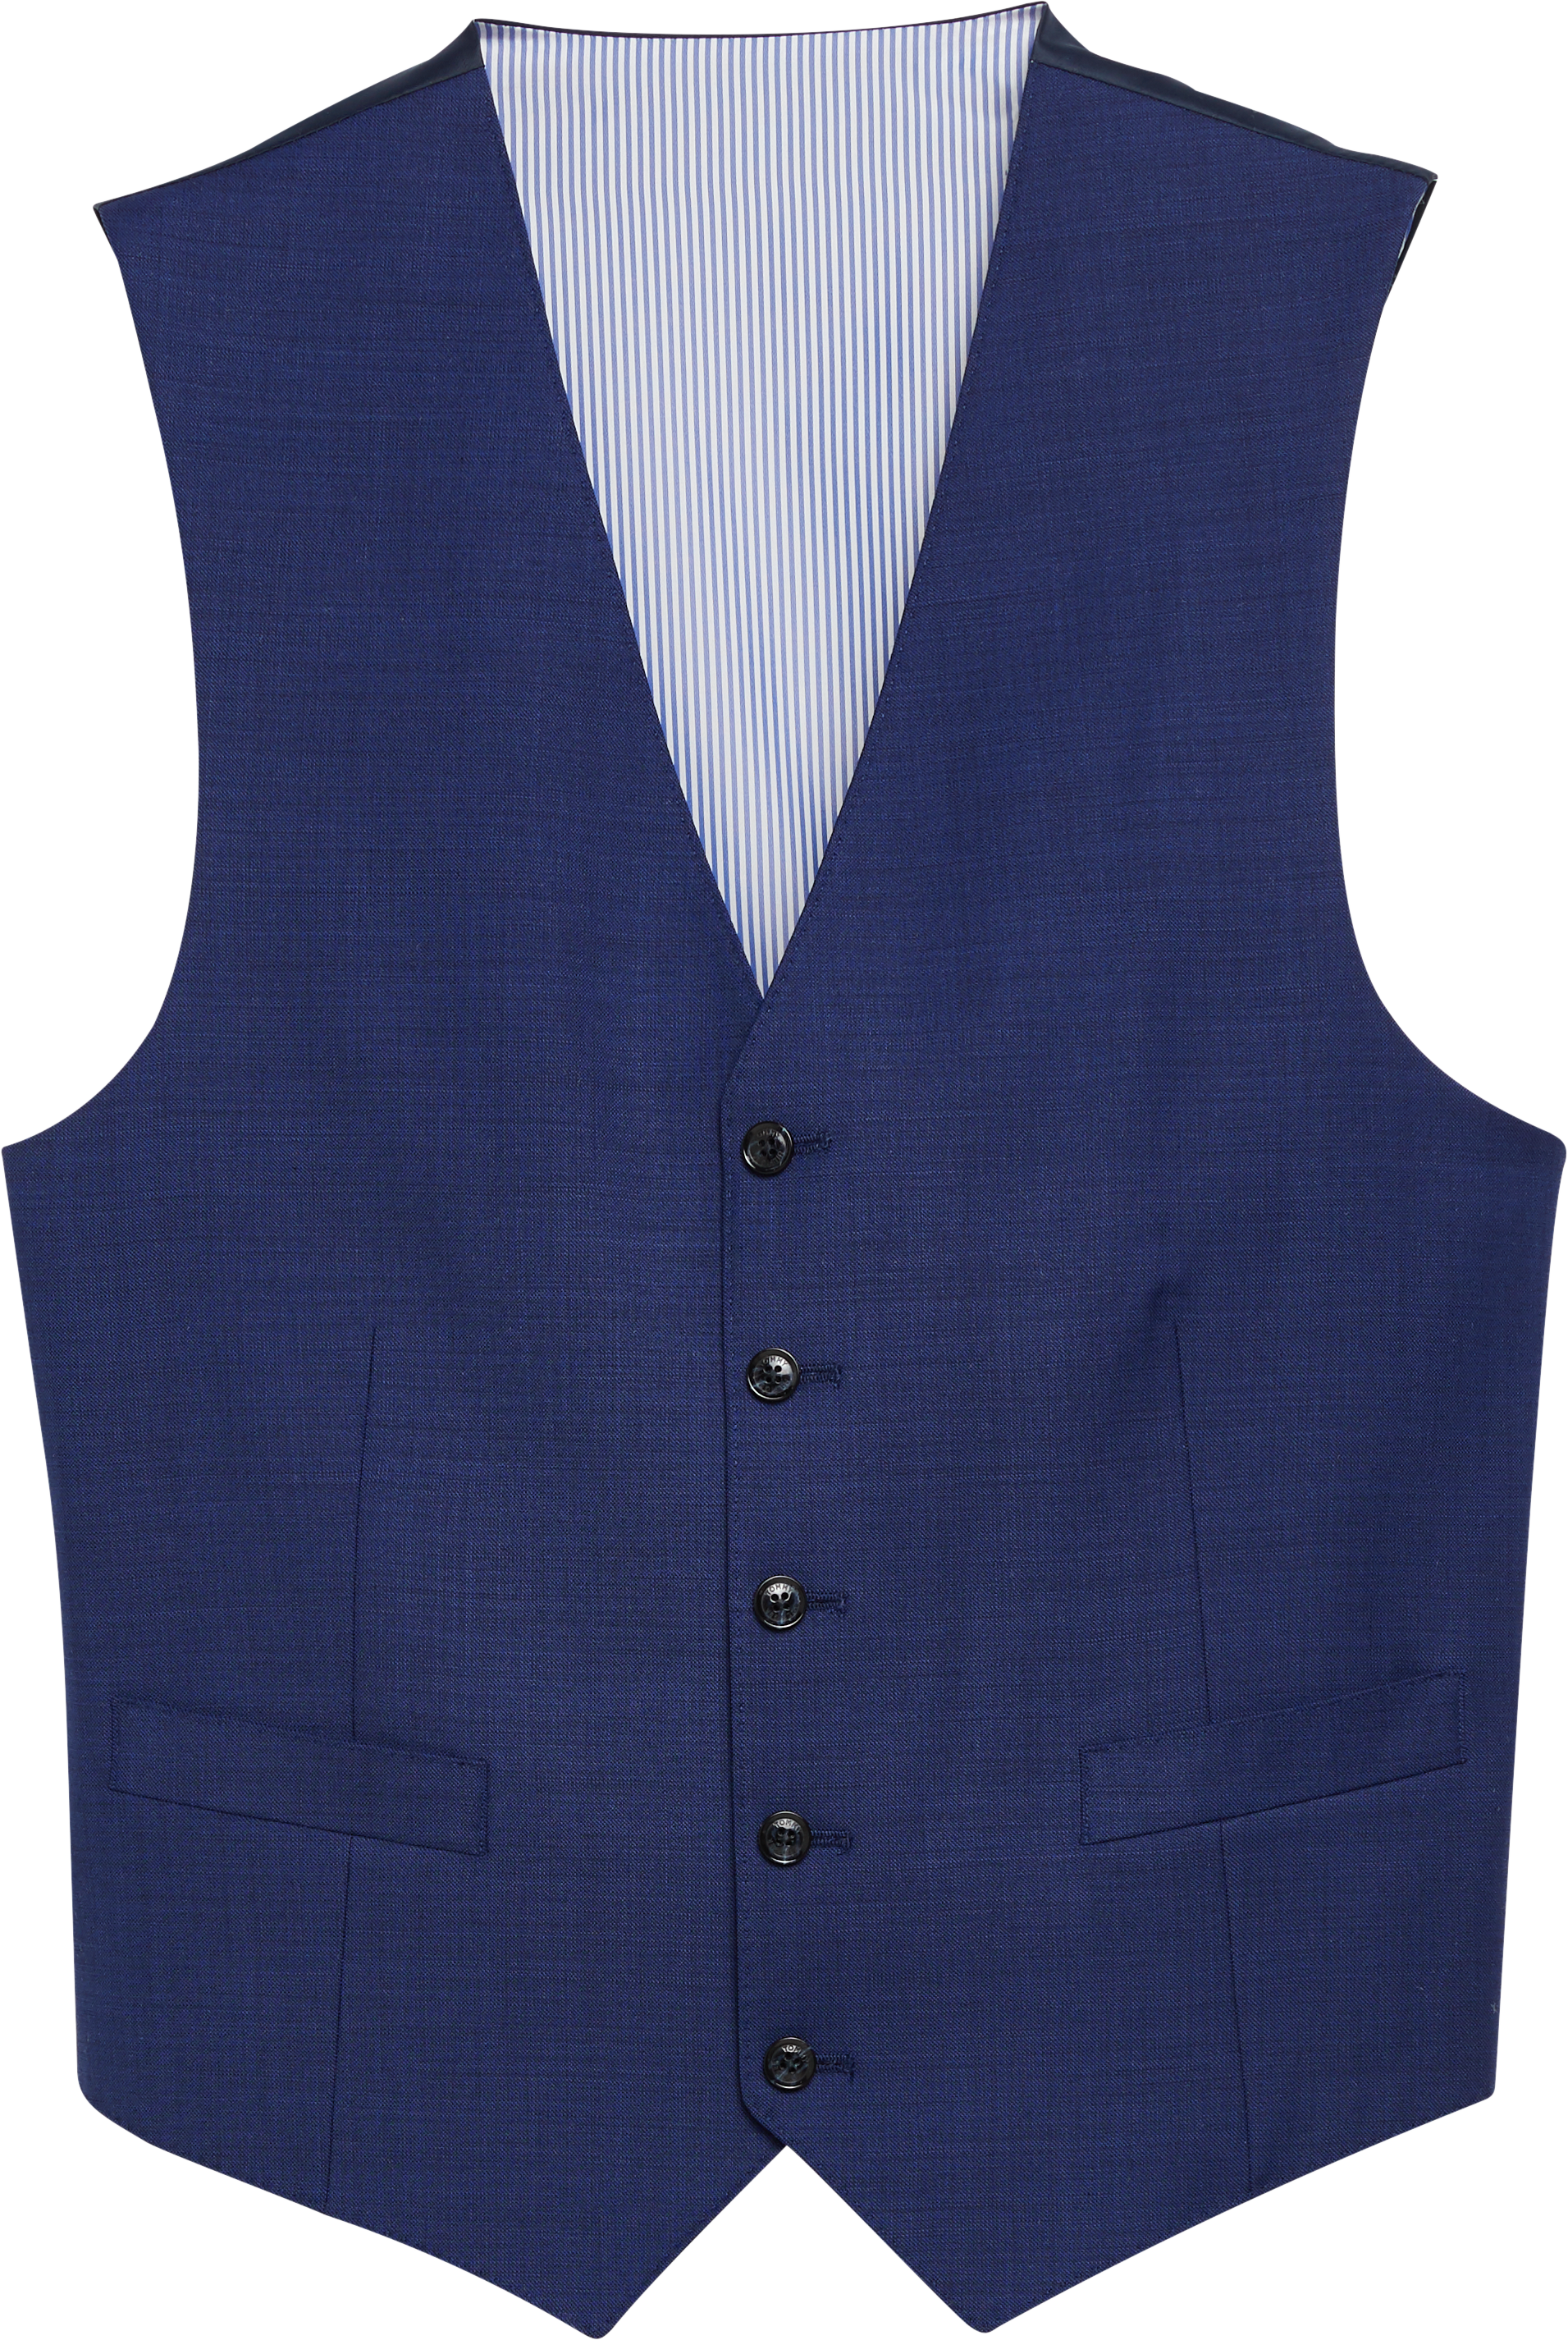 Tommy Hilfiger Modern Fit Suit Separates Vest, Postman Blue